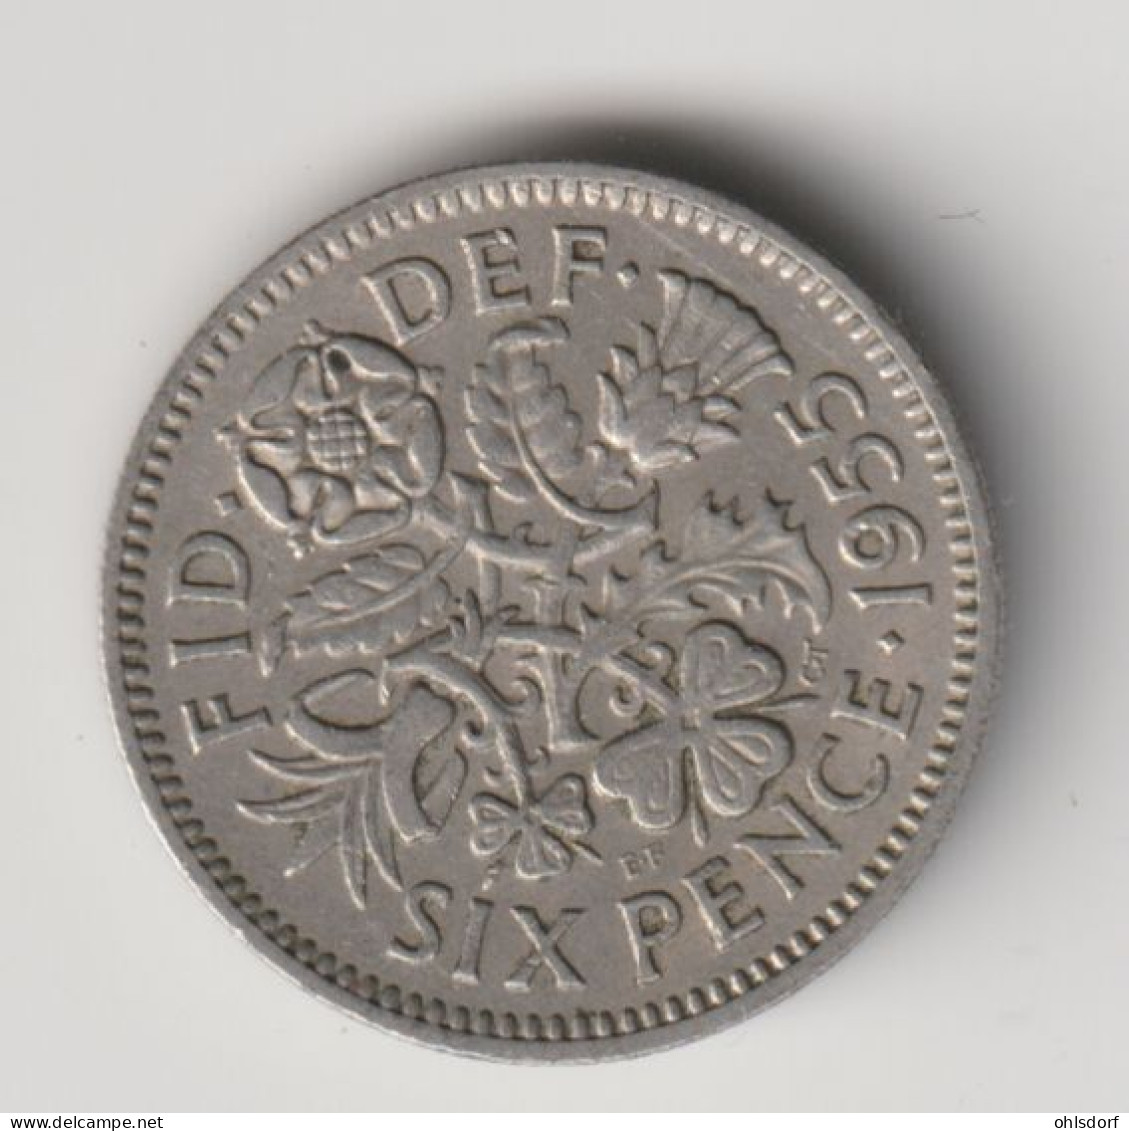 GREAT BRITAIN 1955: 6 Pence, KM 903 - H. 6 Pence